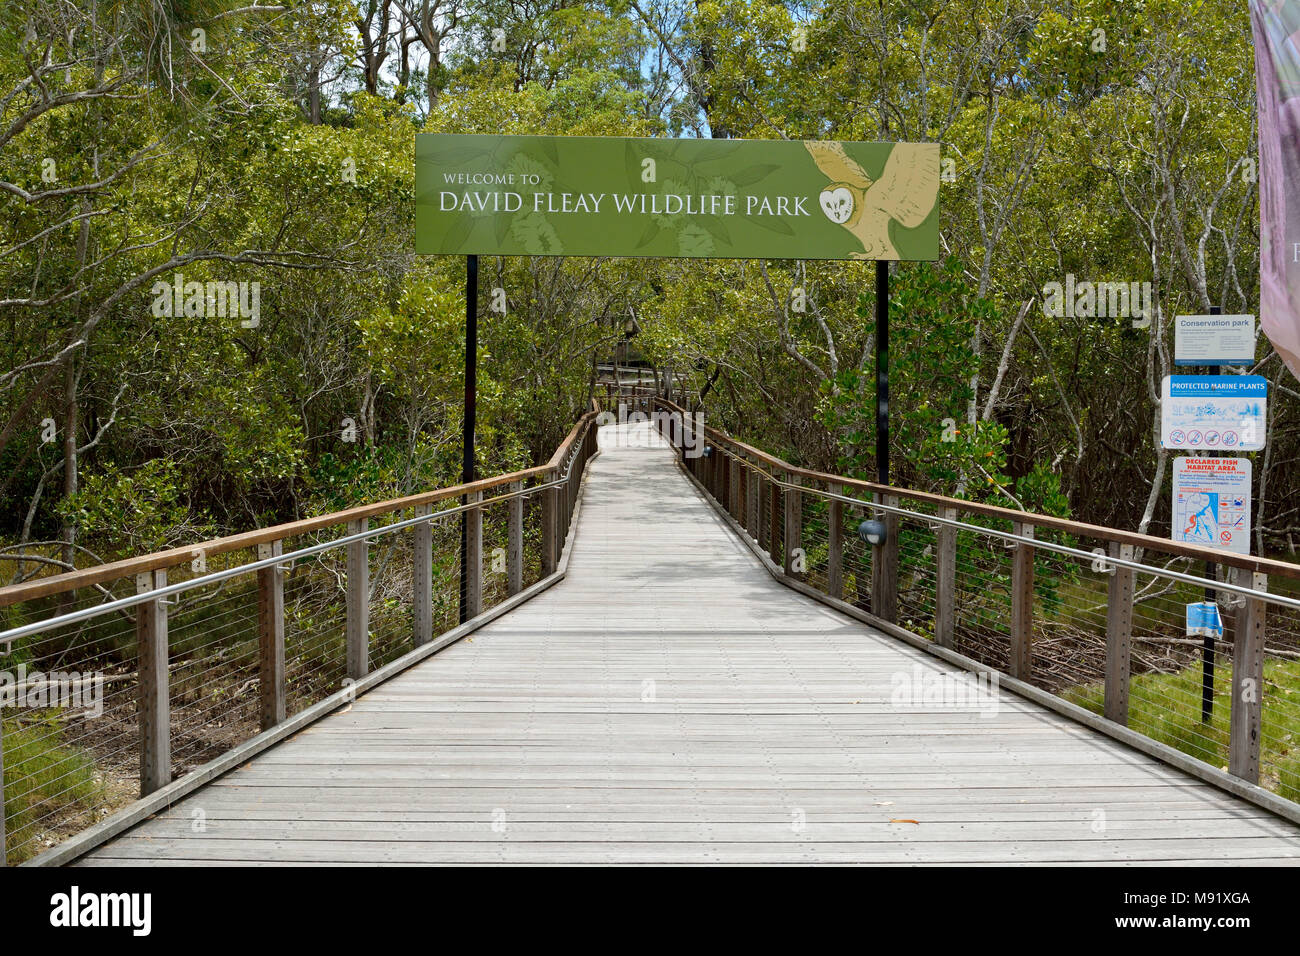 Burleigh Heads, Gold Coast, Queensland, Australia - January 11, 2018. Entrance to David Fleay Wildlife park, with vegetation and boardwalk. Stock Photo